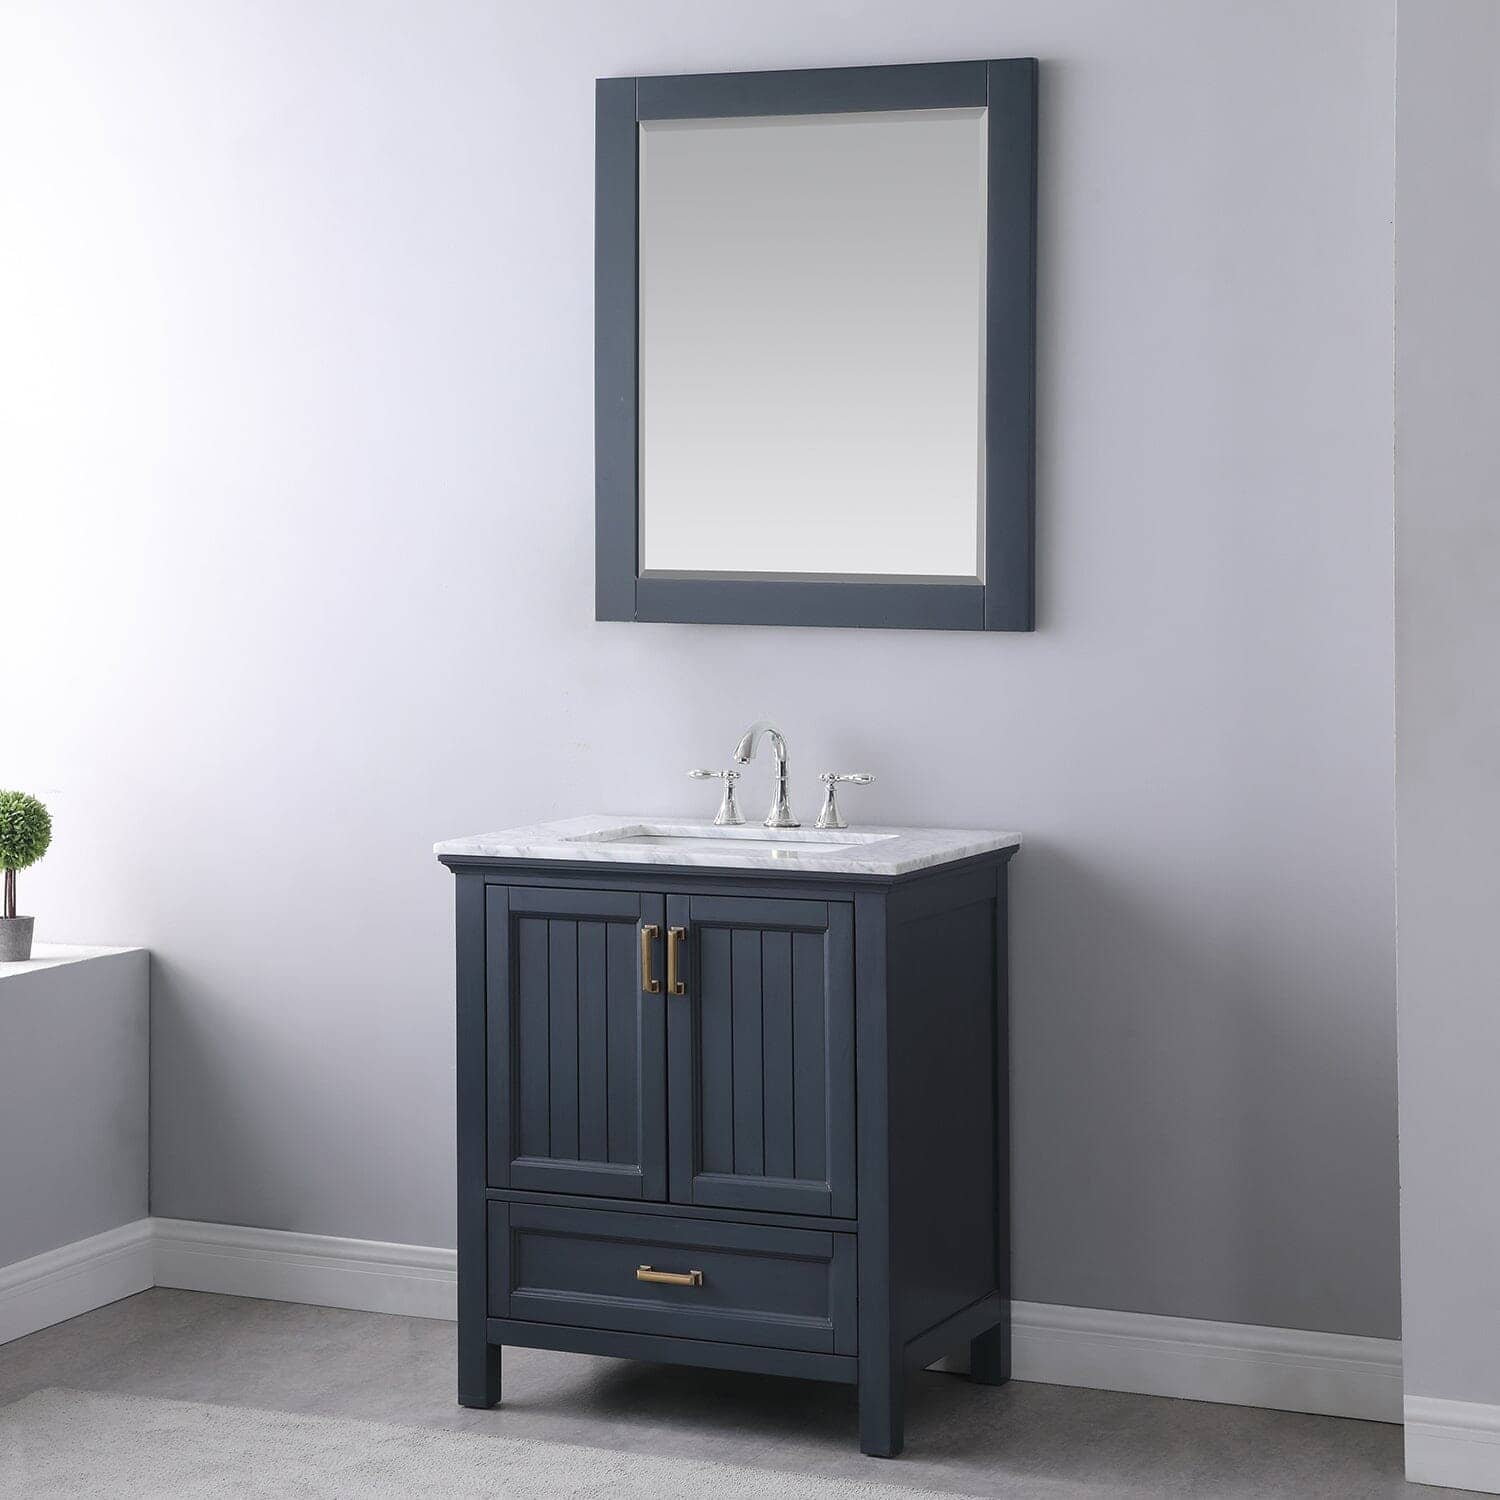 Bathroom Mirror - Altair Maribella 28W x 36H - 535030-MIR-CB